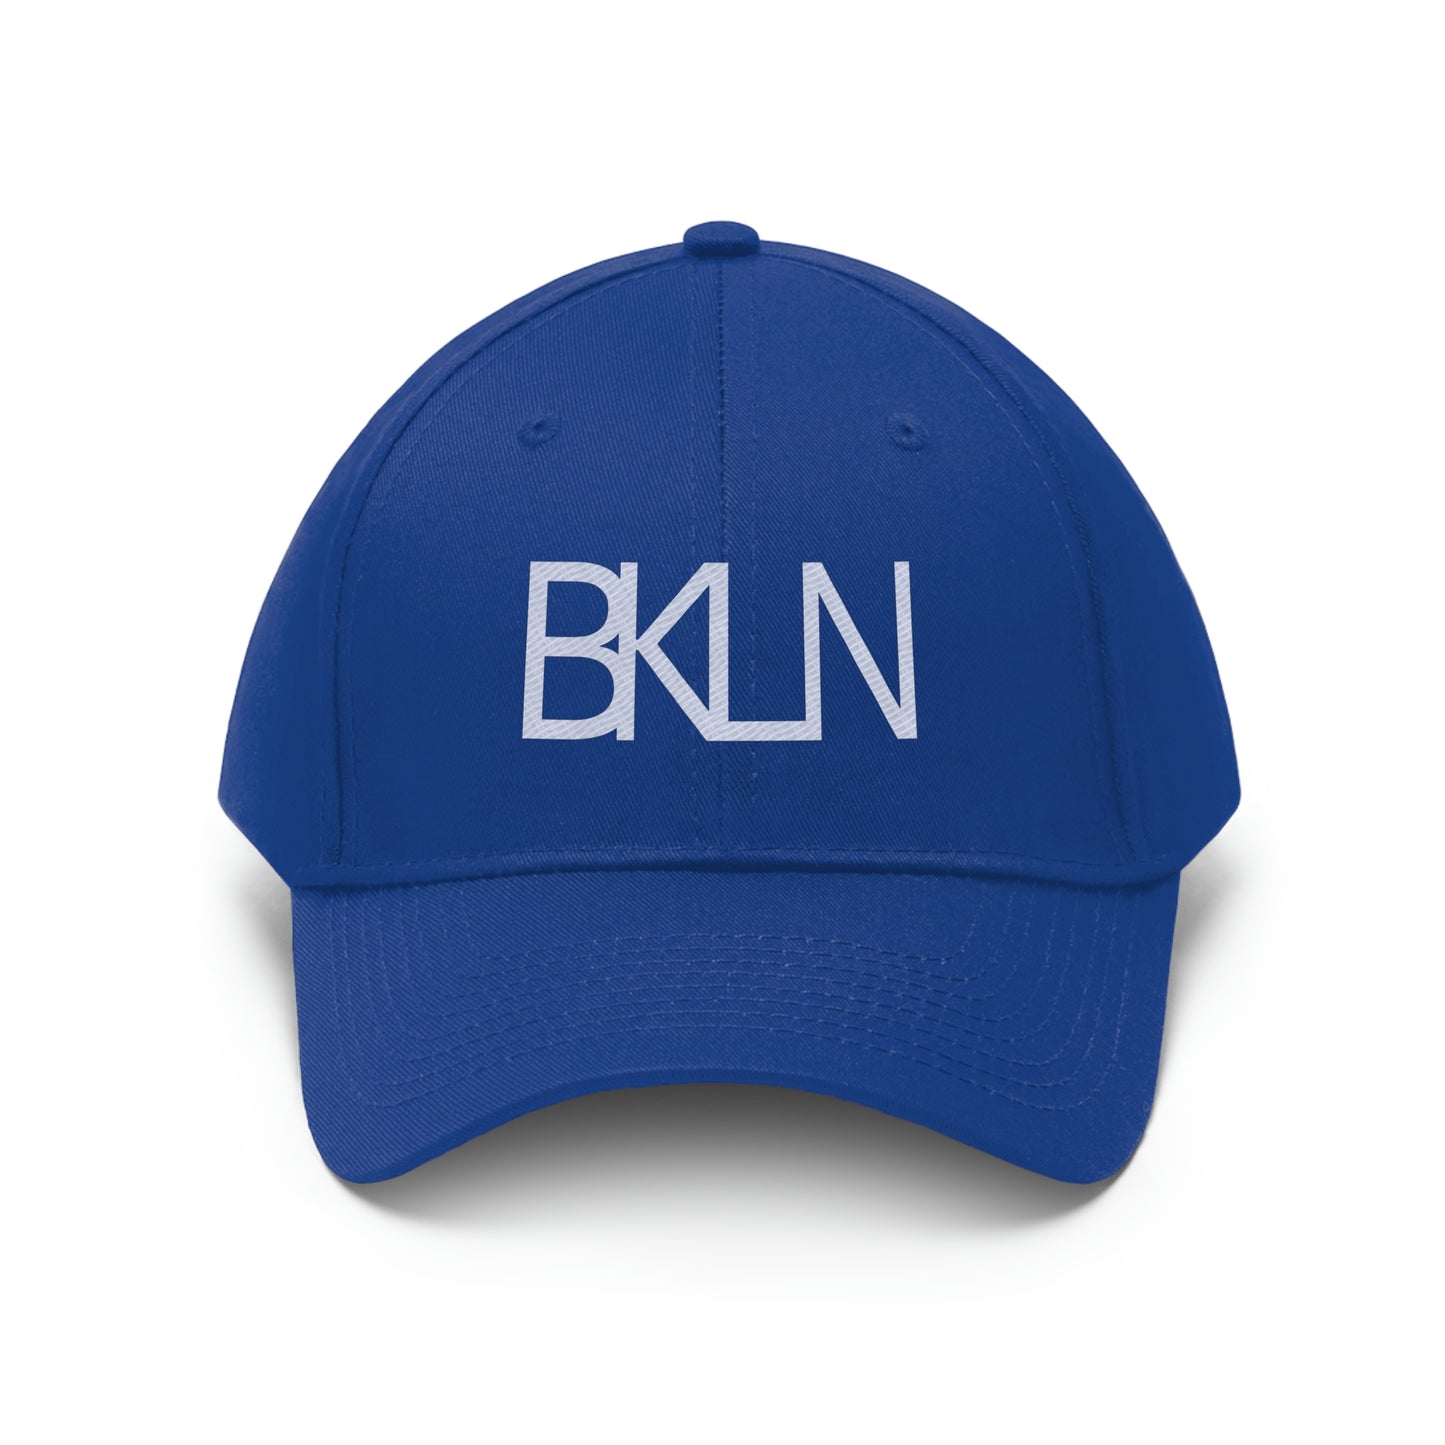 BKLN - Embroidered Hat